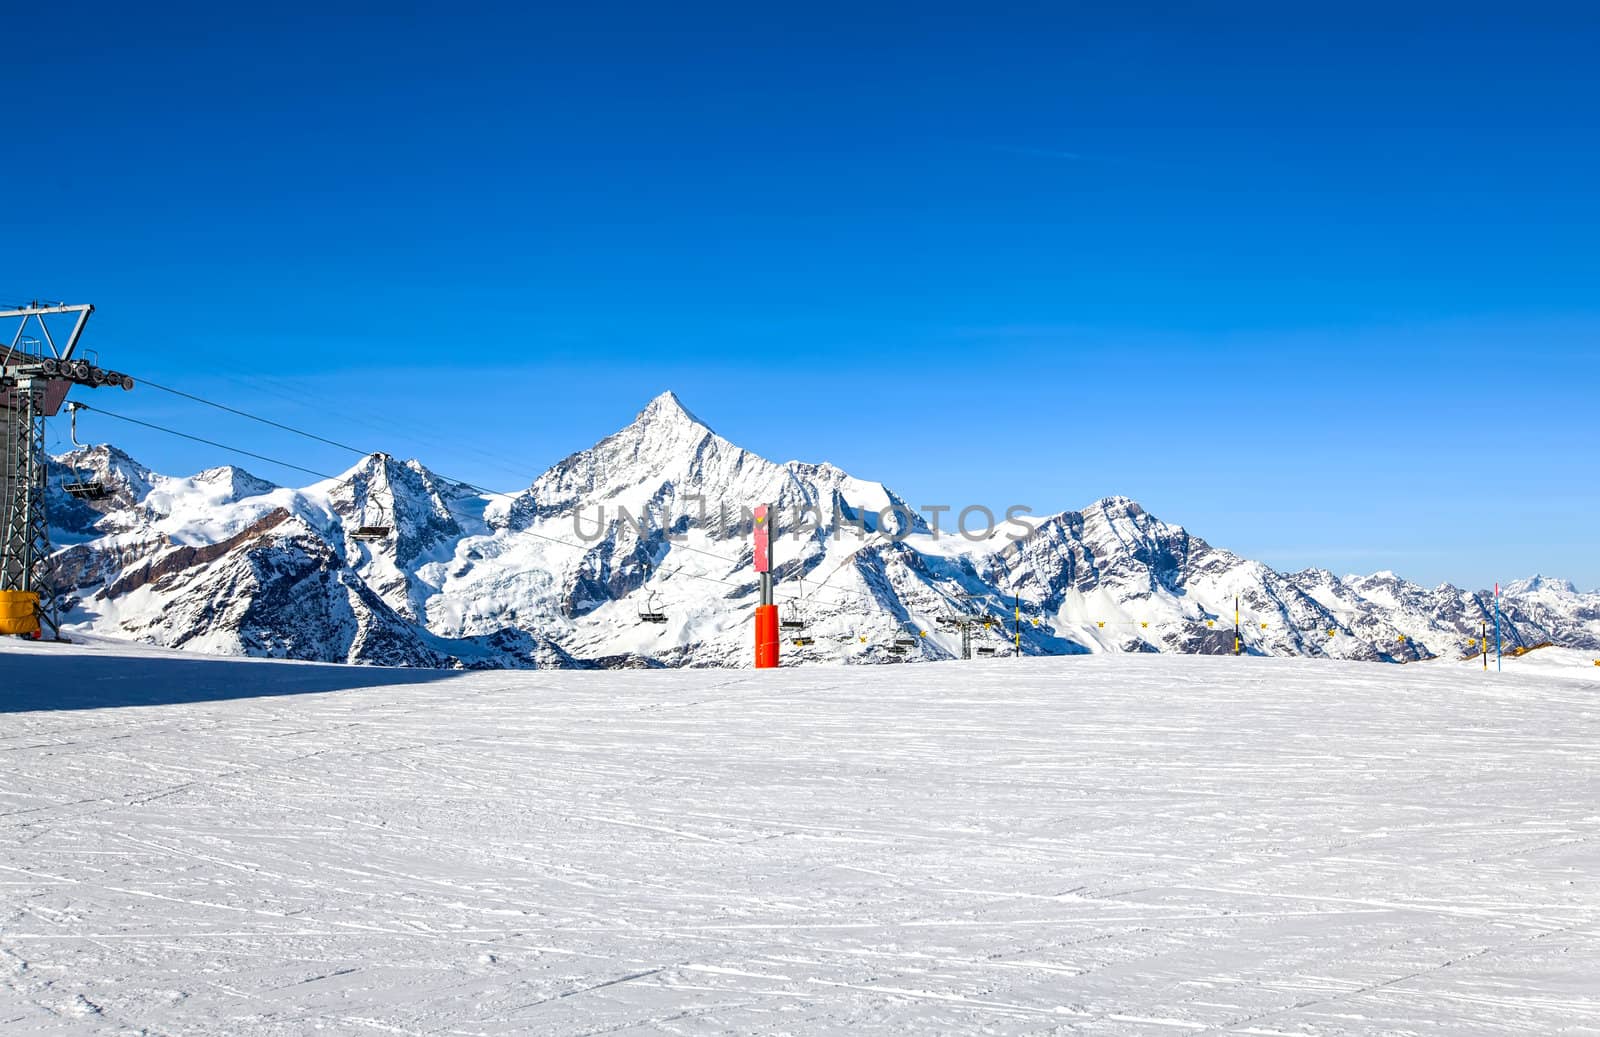 Ski lift in Zermatt in Switzerland